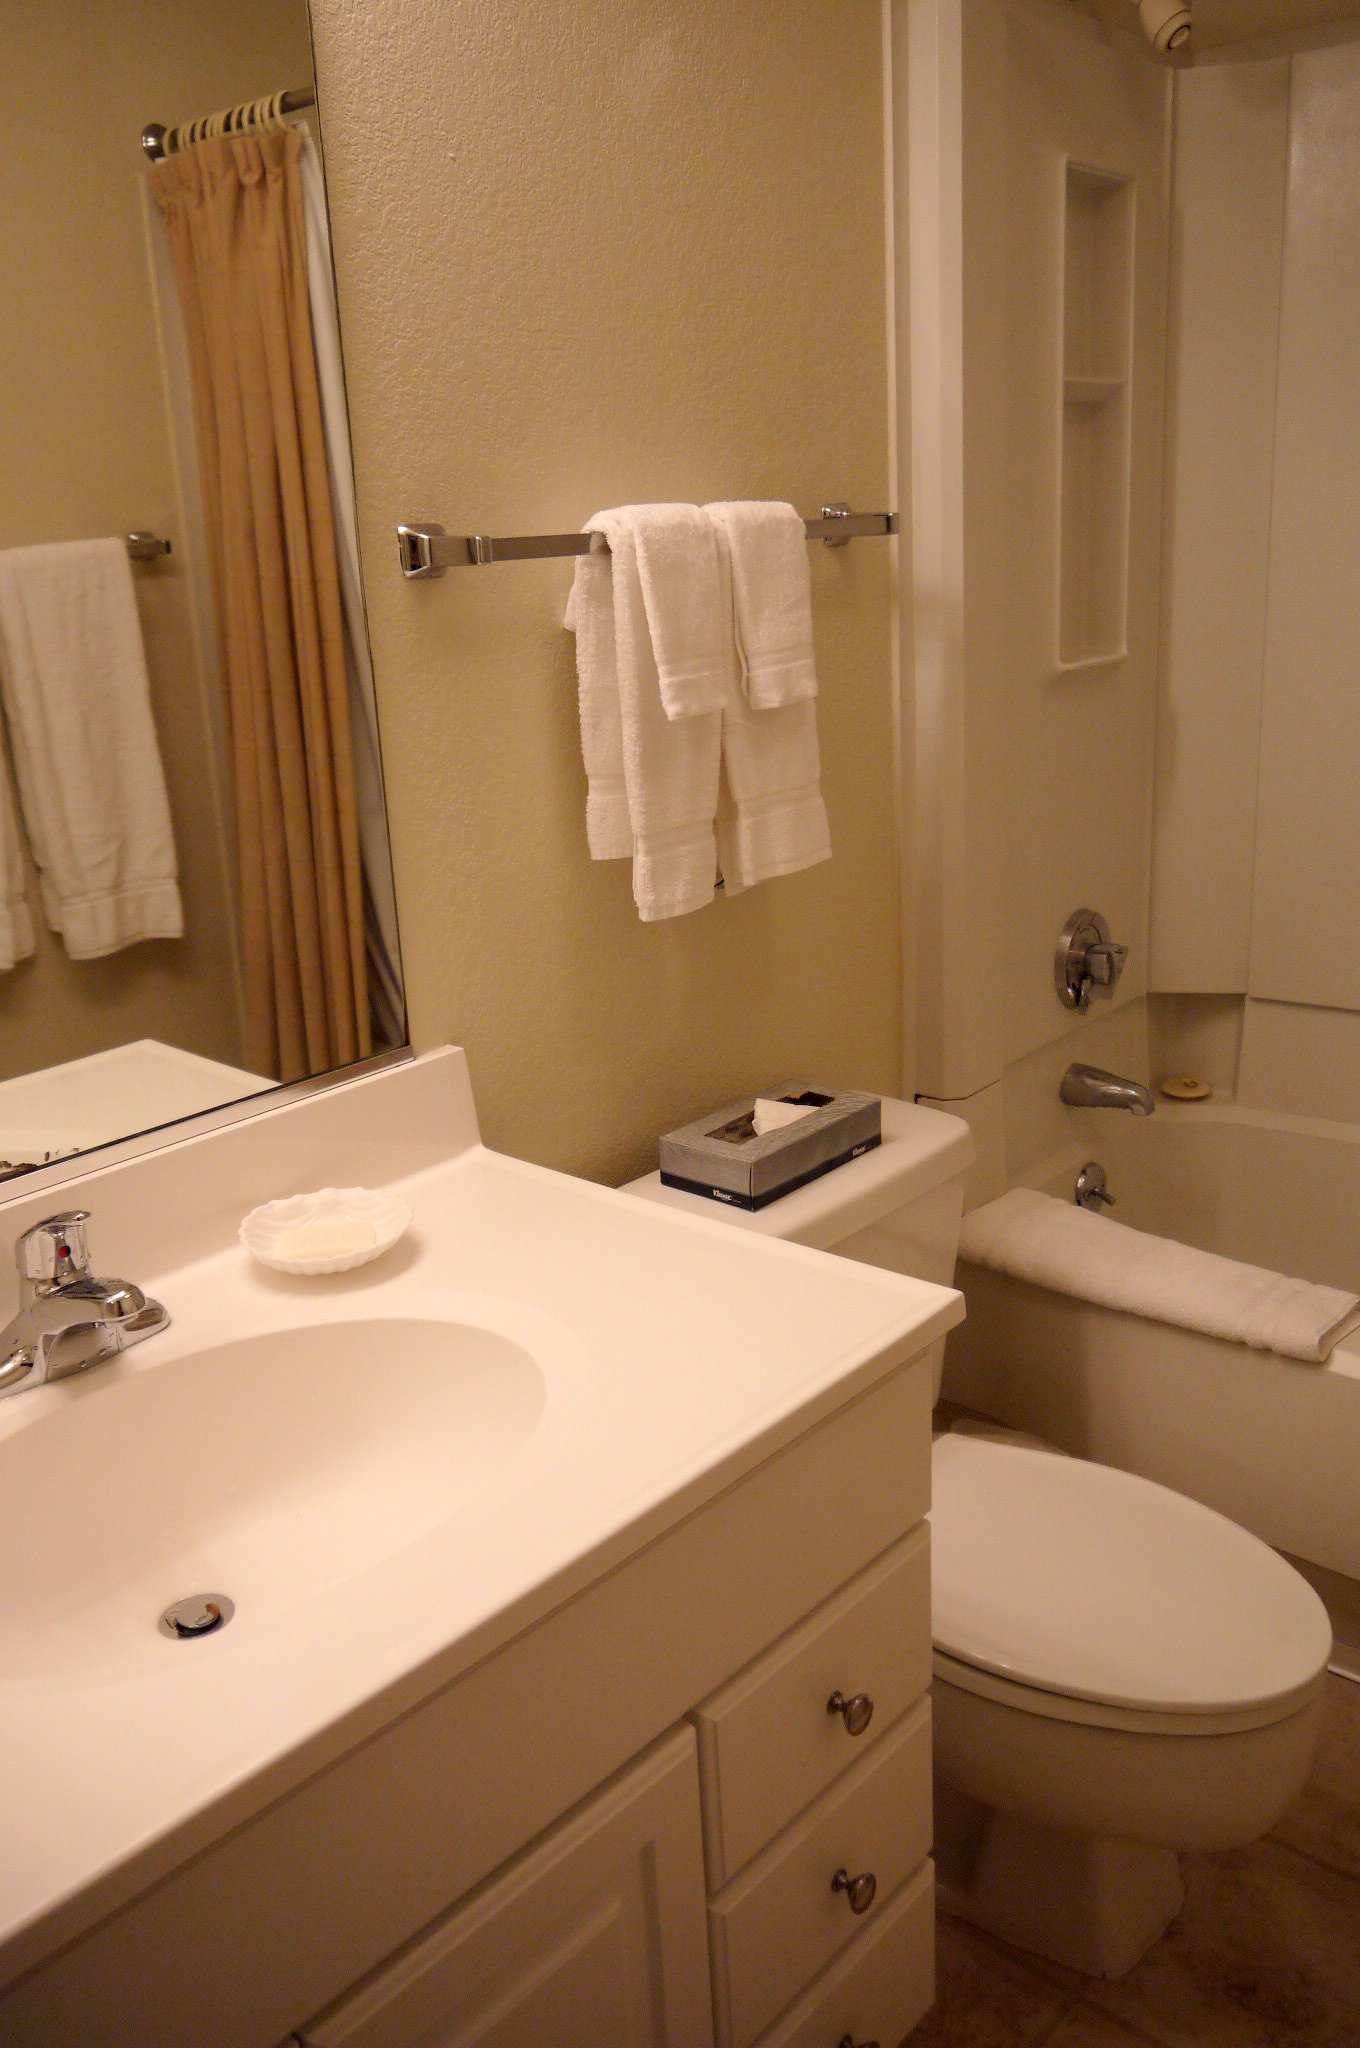 a bathroom with a toilet, shower, sink and bath tub